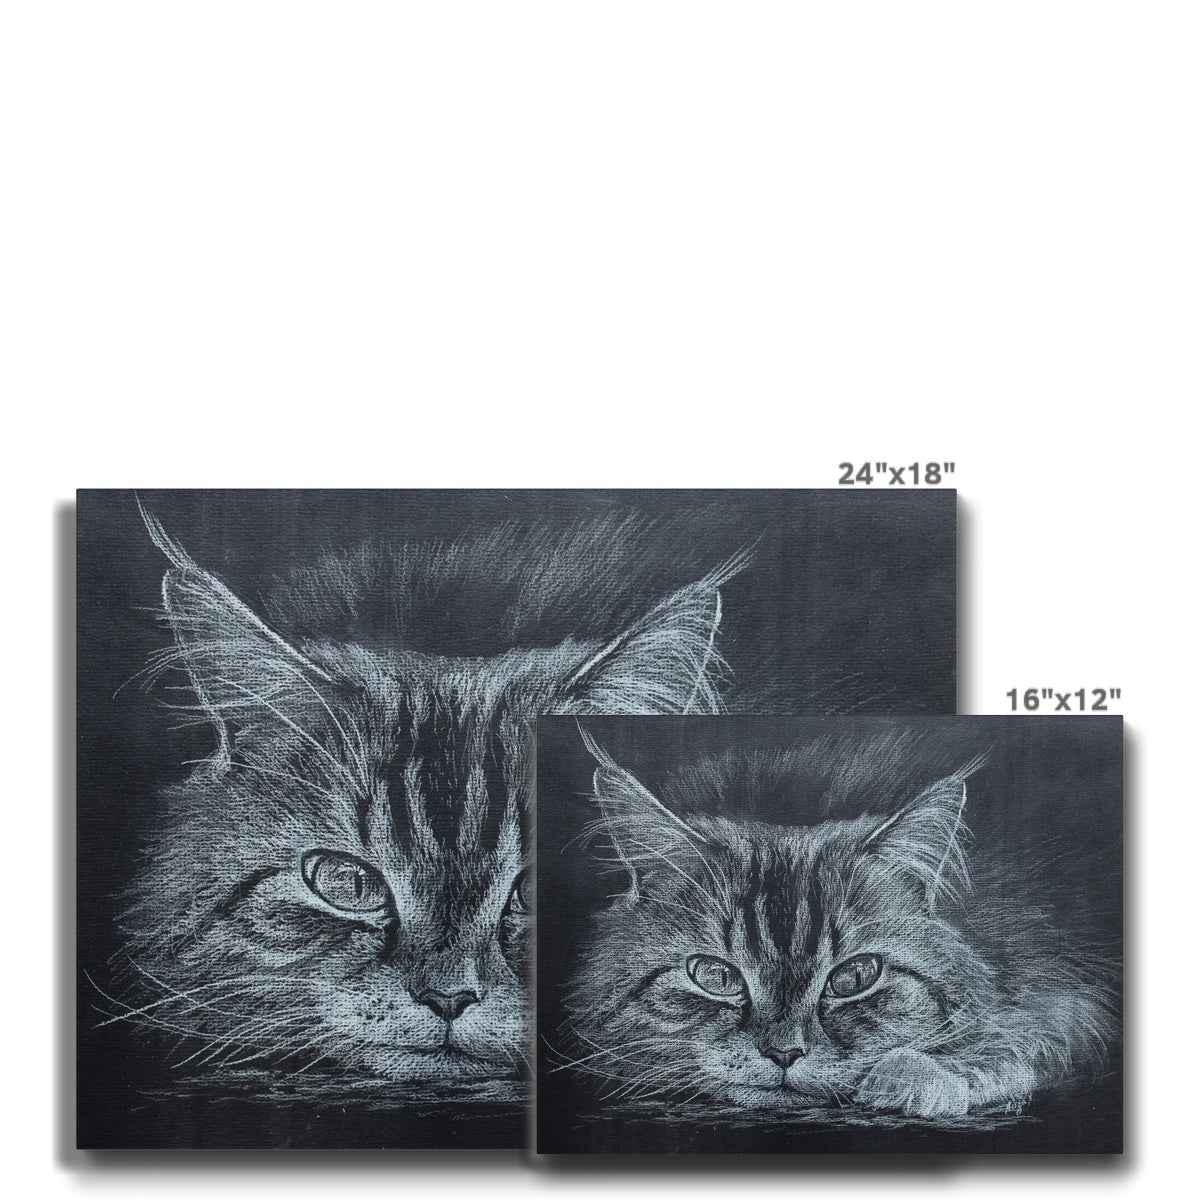 Black & White Chalk Sketch Of Cat Canvas